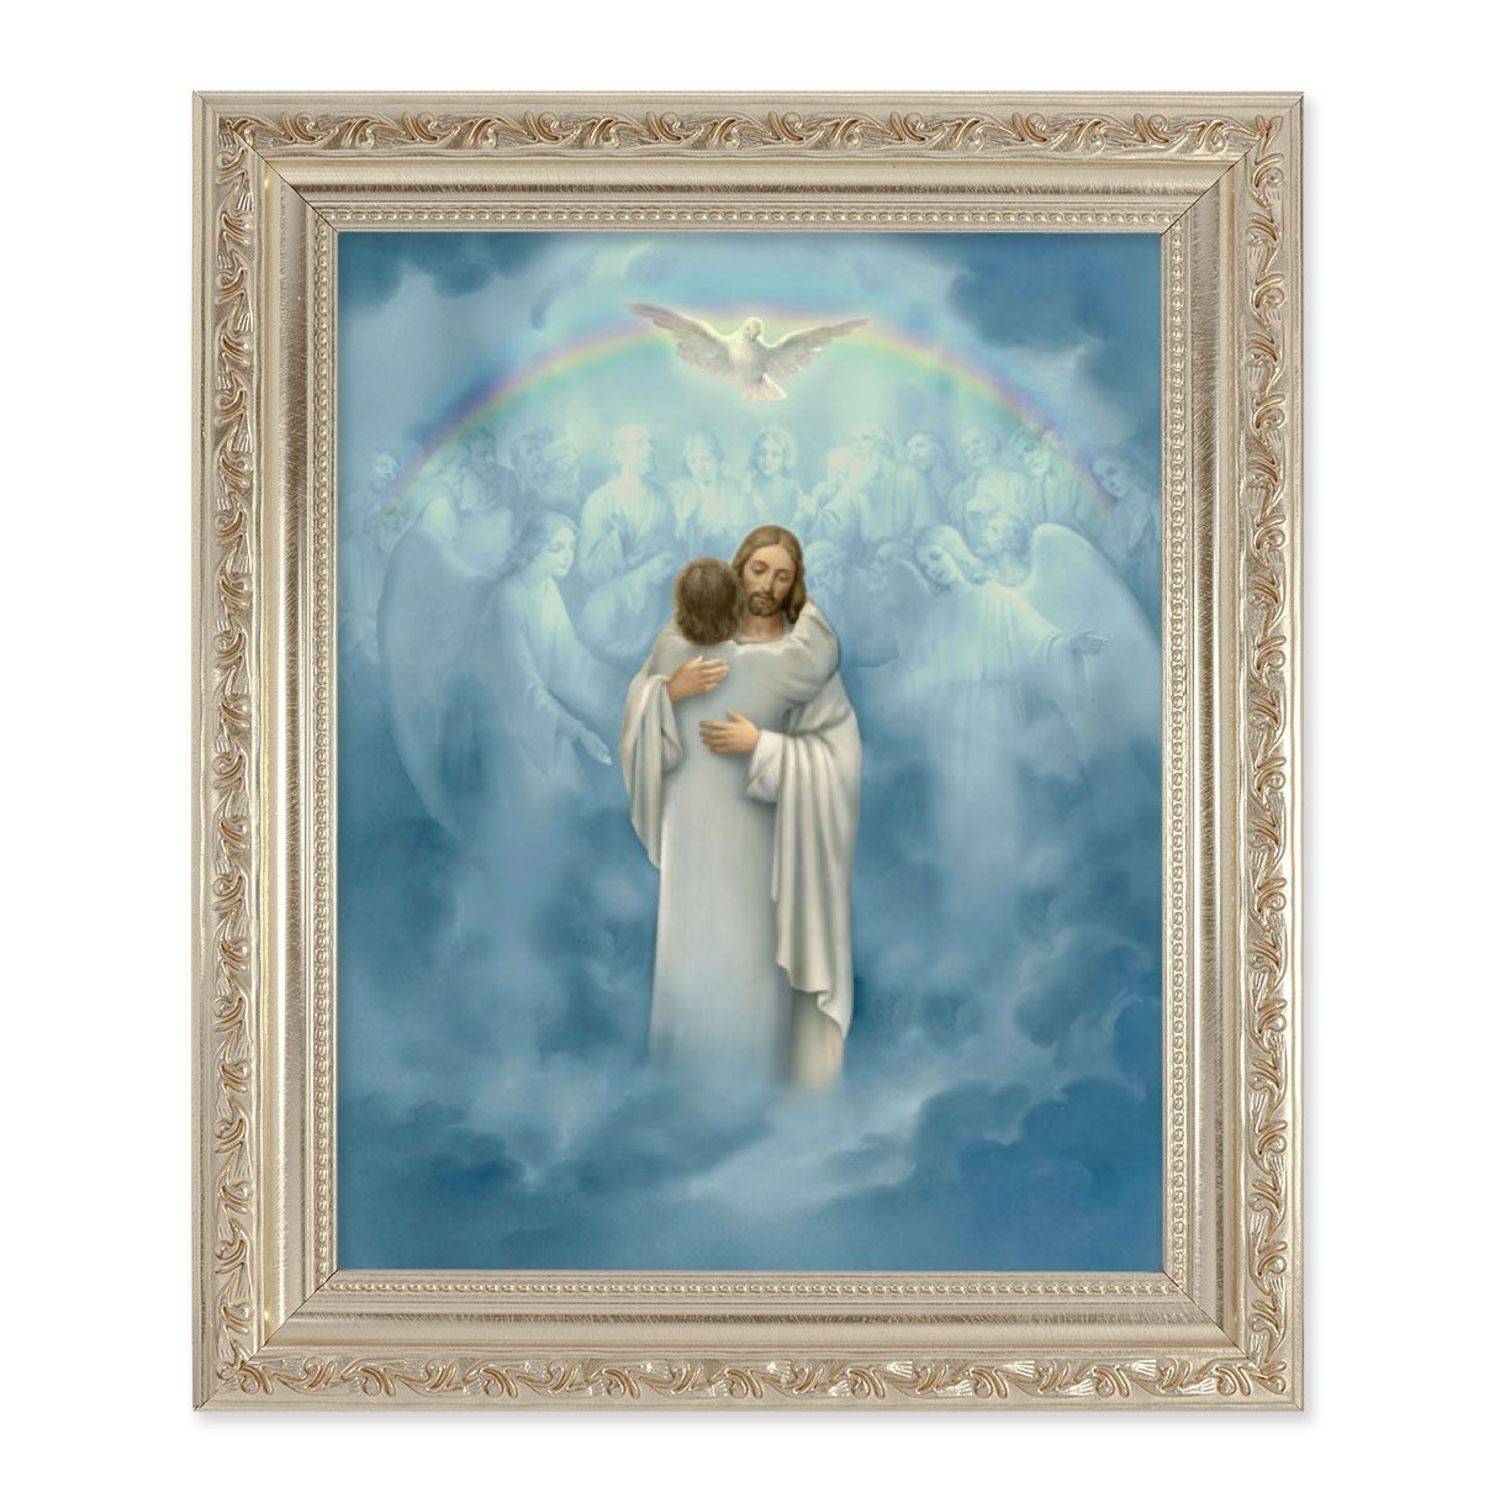 Framed print of Jesus welcoming home individual